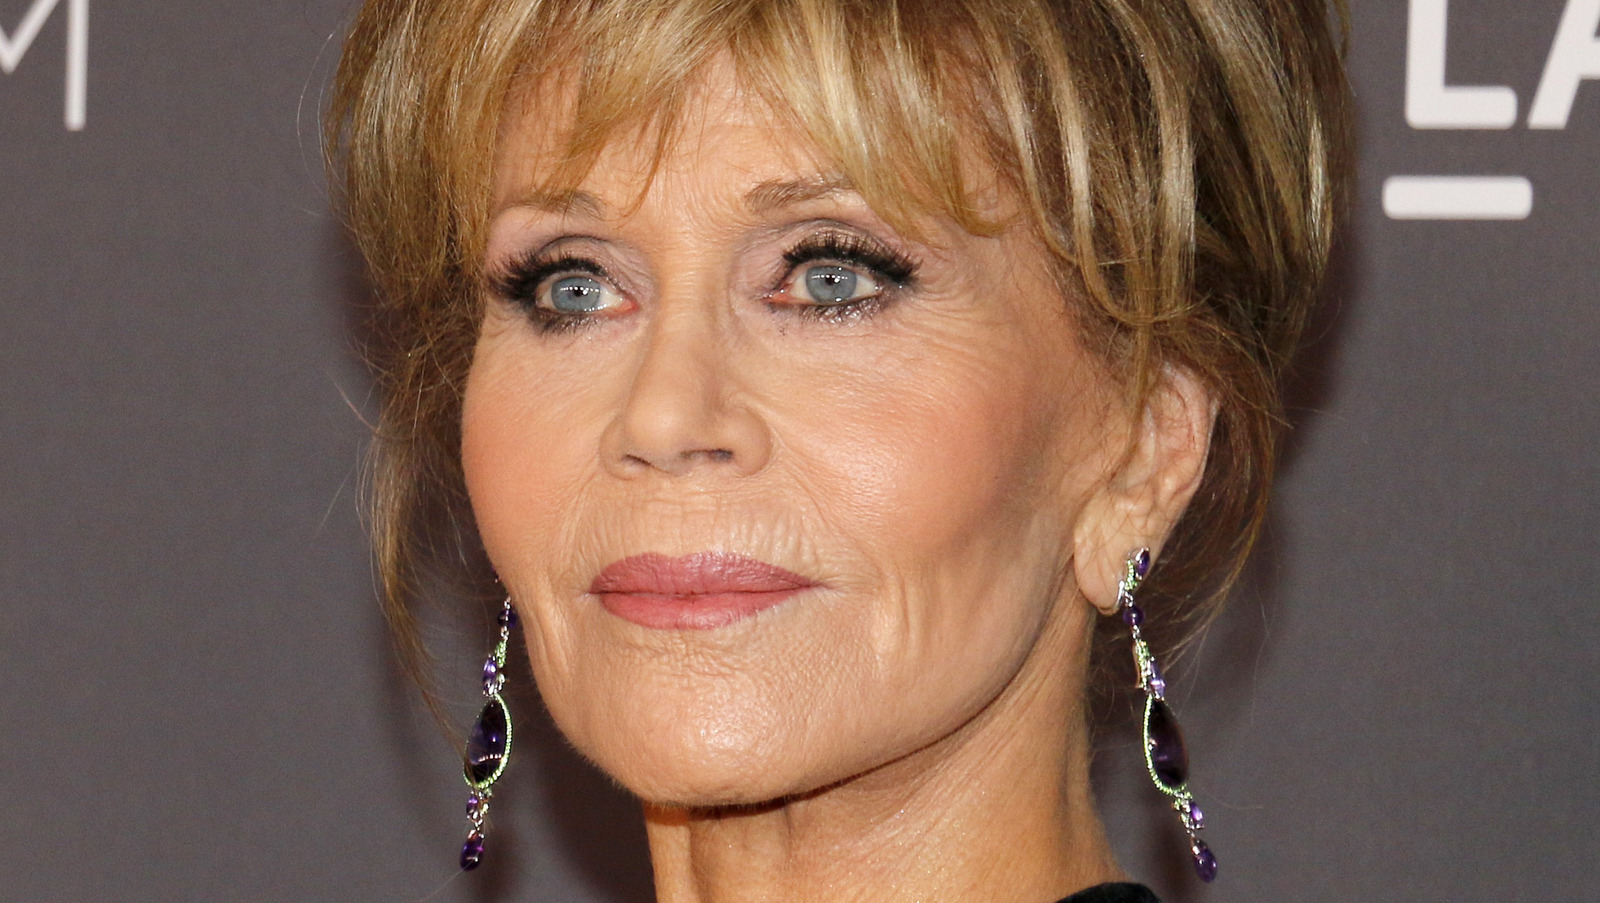 Is Bridget Fonda related to Jane Fonda?